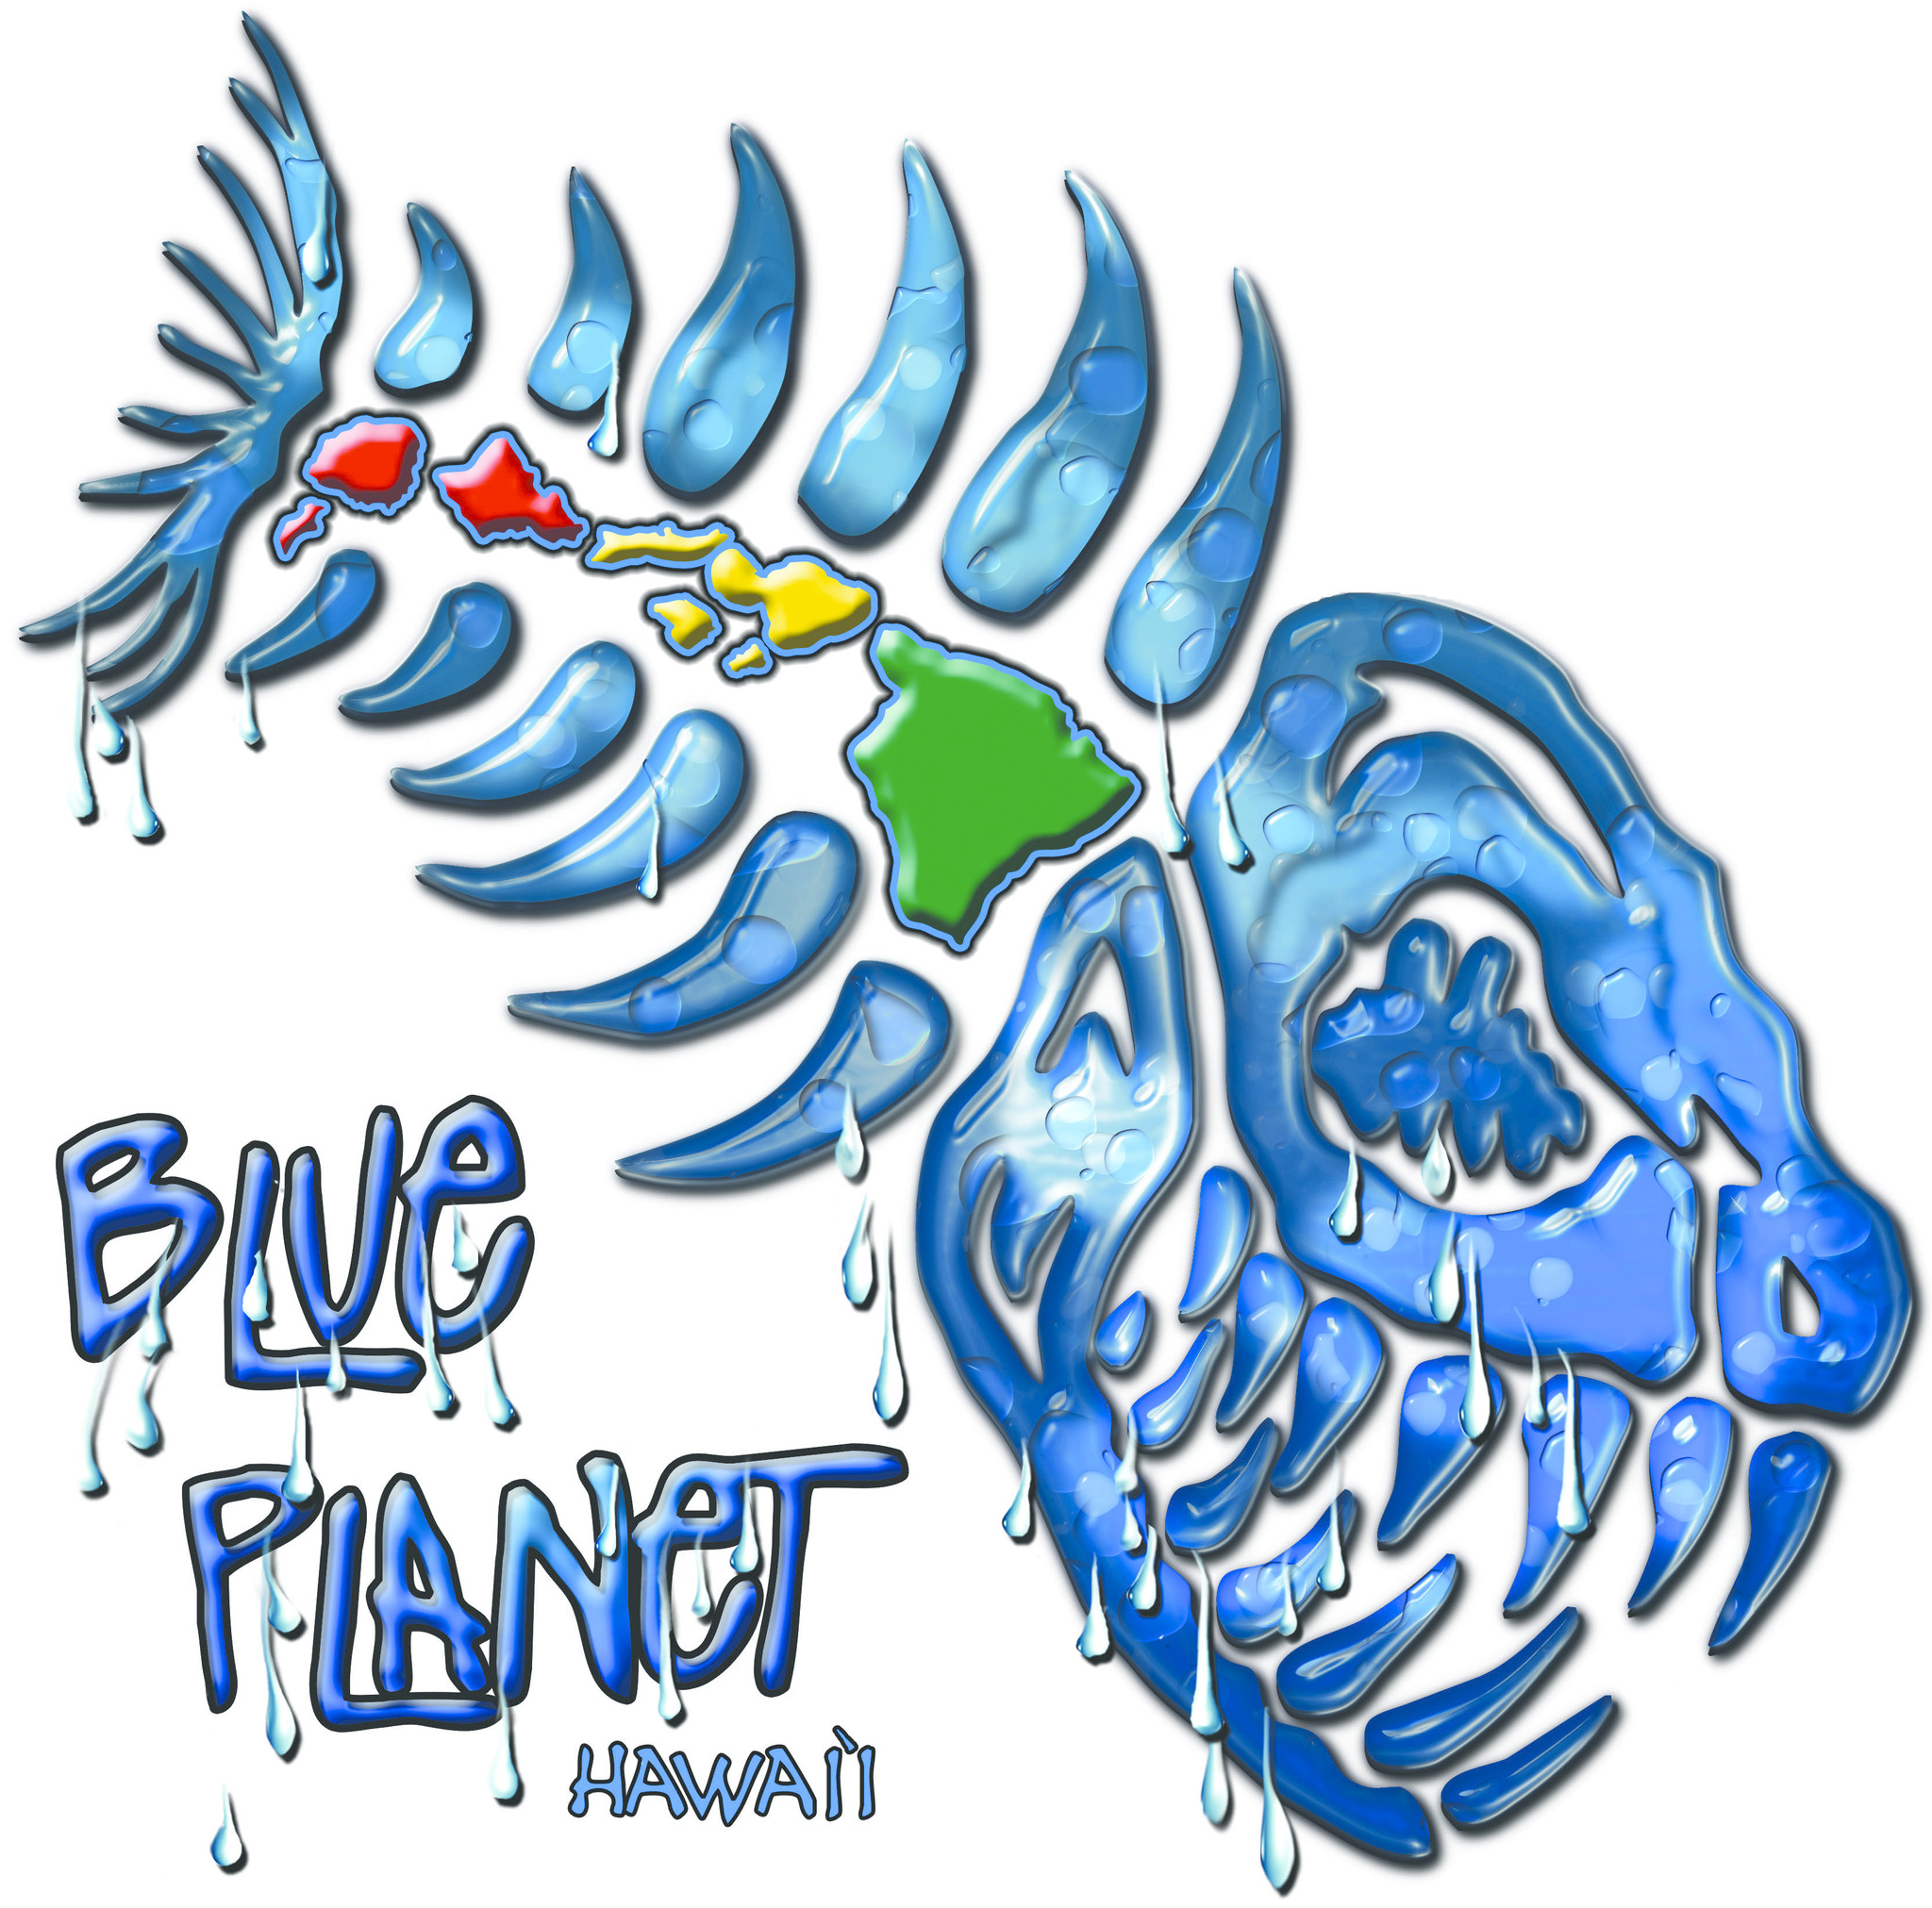 The Blue Planet Fish Logo Background - Blue Planet Surf Shop